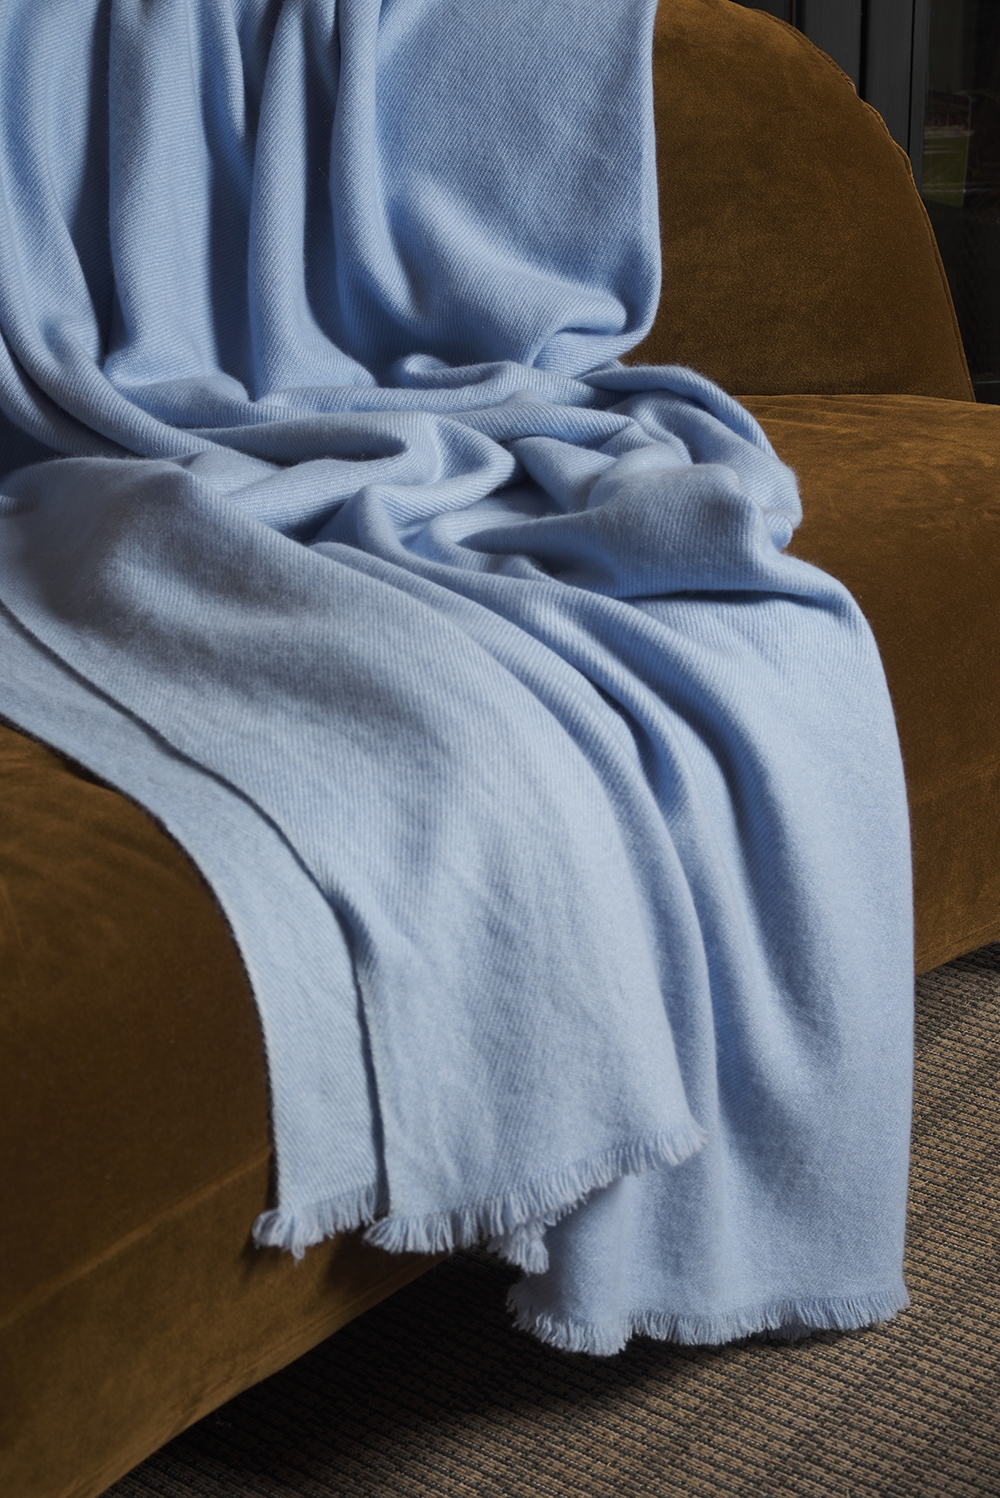 Cashmere accessories blanket toodoo plain l 220 x 220 blue sky 220x220cm